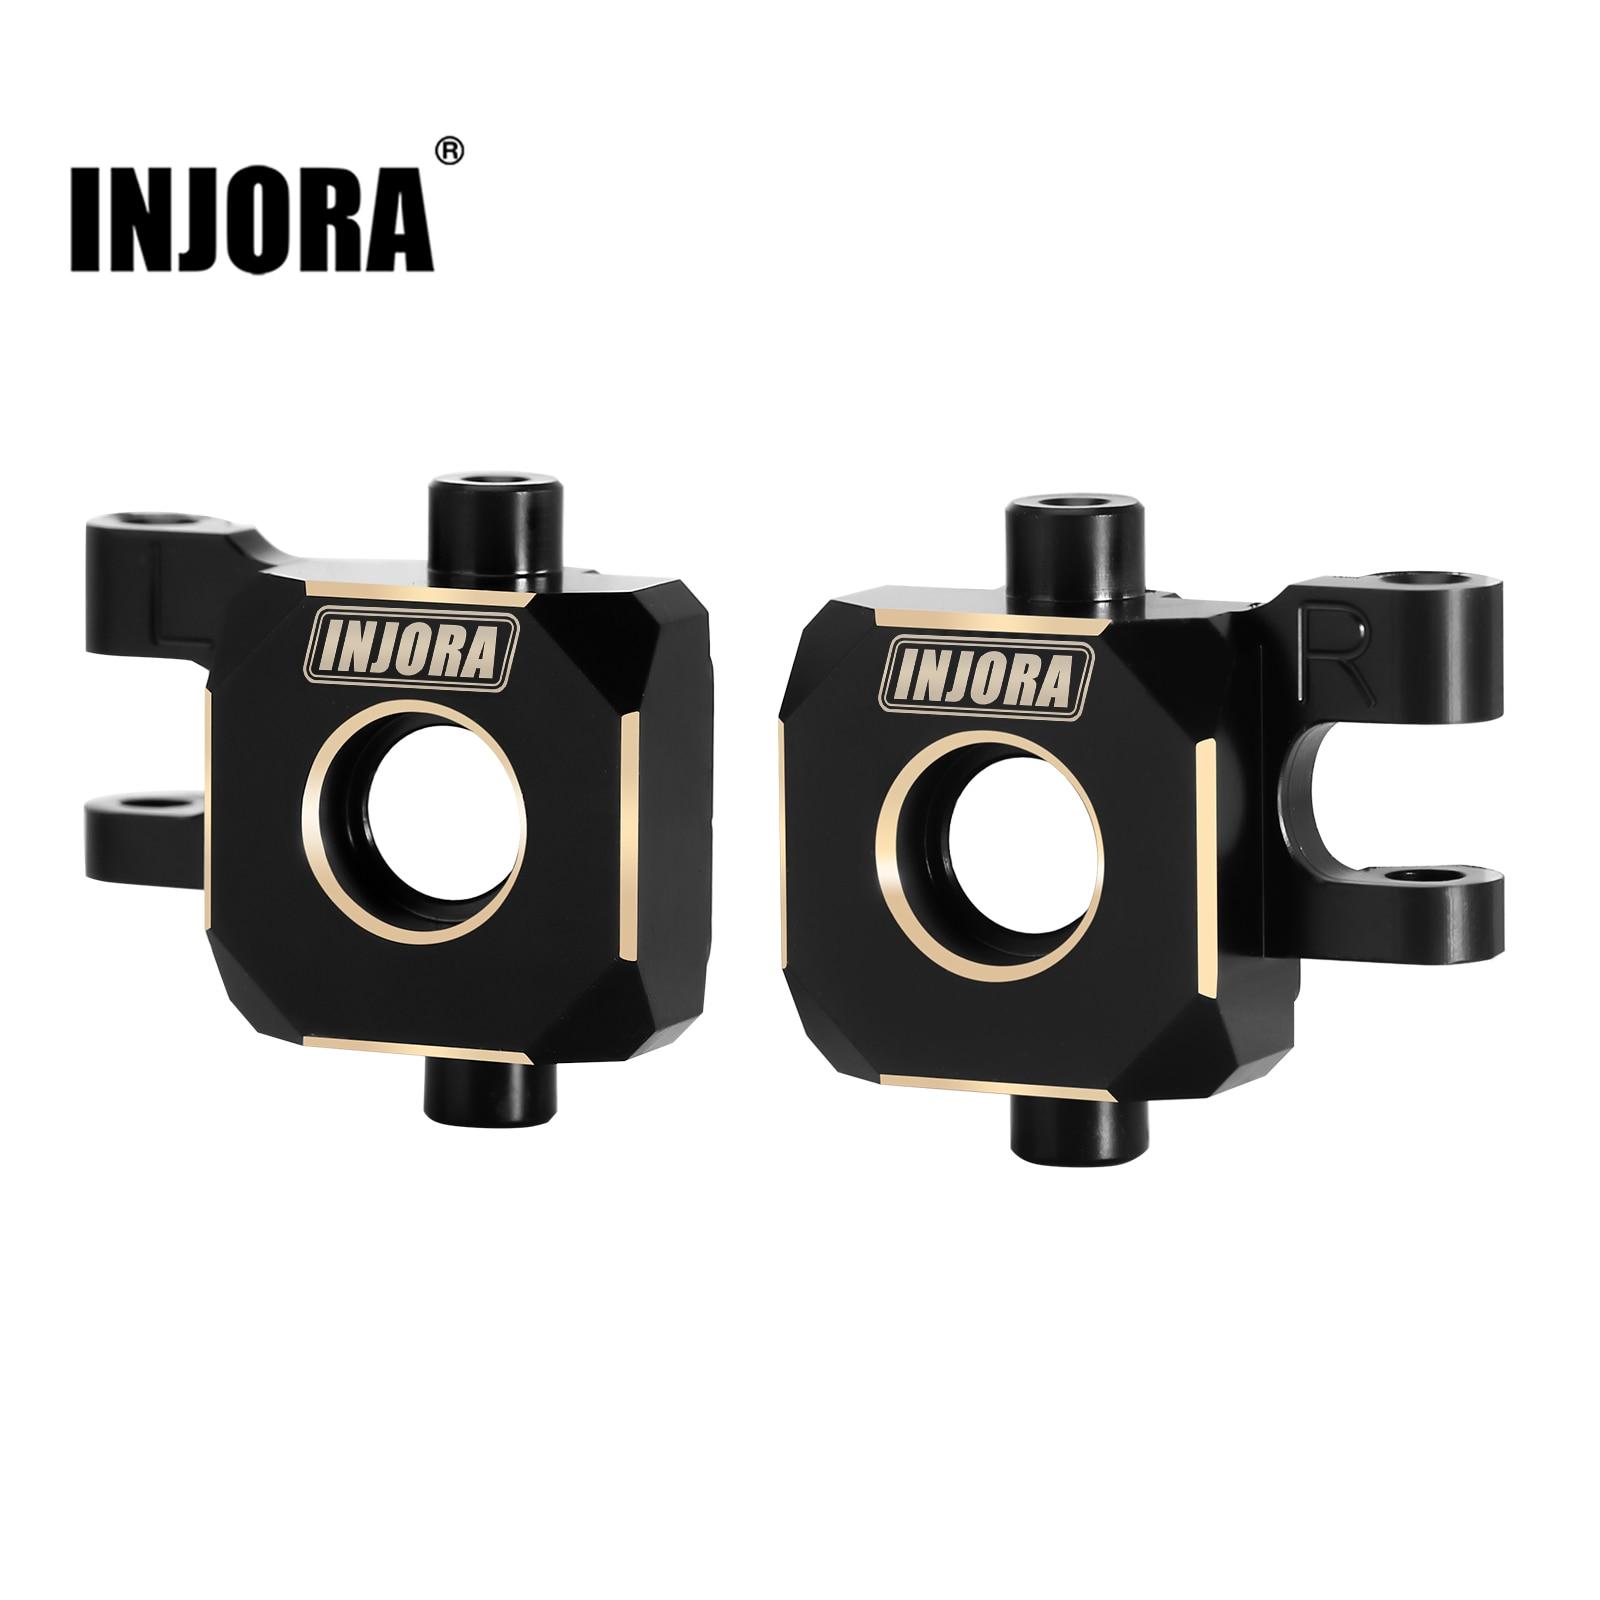 INJORA-11g-Black-Coating-Brass-Steering-Blocks-Knuckle-for-1-18-RC-Crawler-TRX4M-Upgrade-Parts.jpg